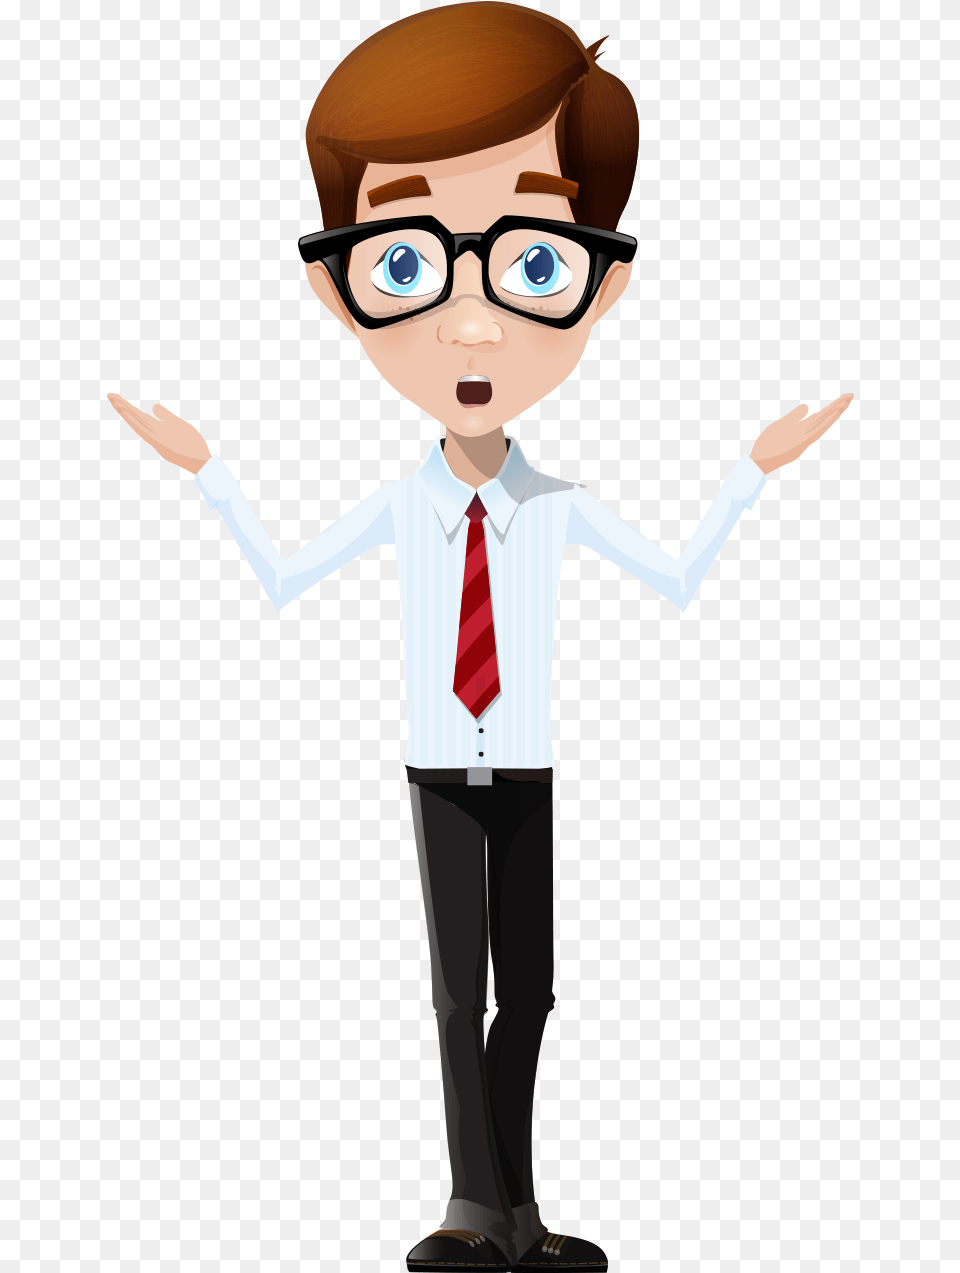 Cartoon Male Boy Character Male Teacher Cartoon, Accessories, Shirt, Tie, Formal Wear Png